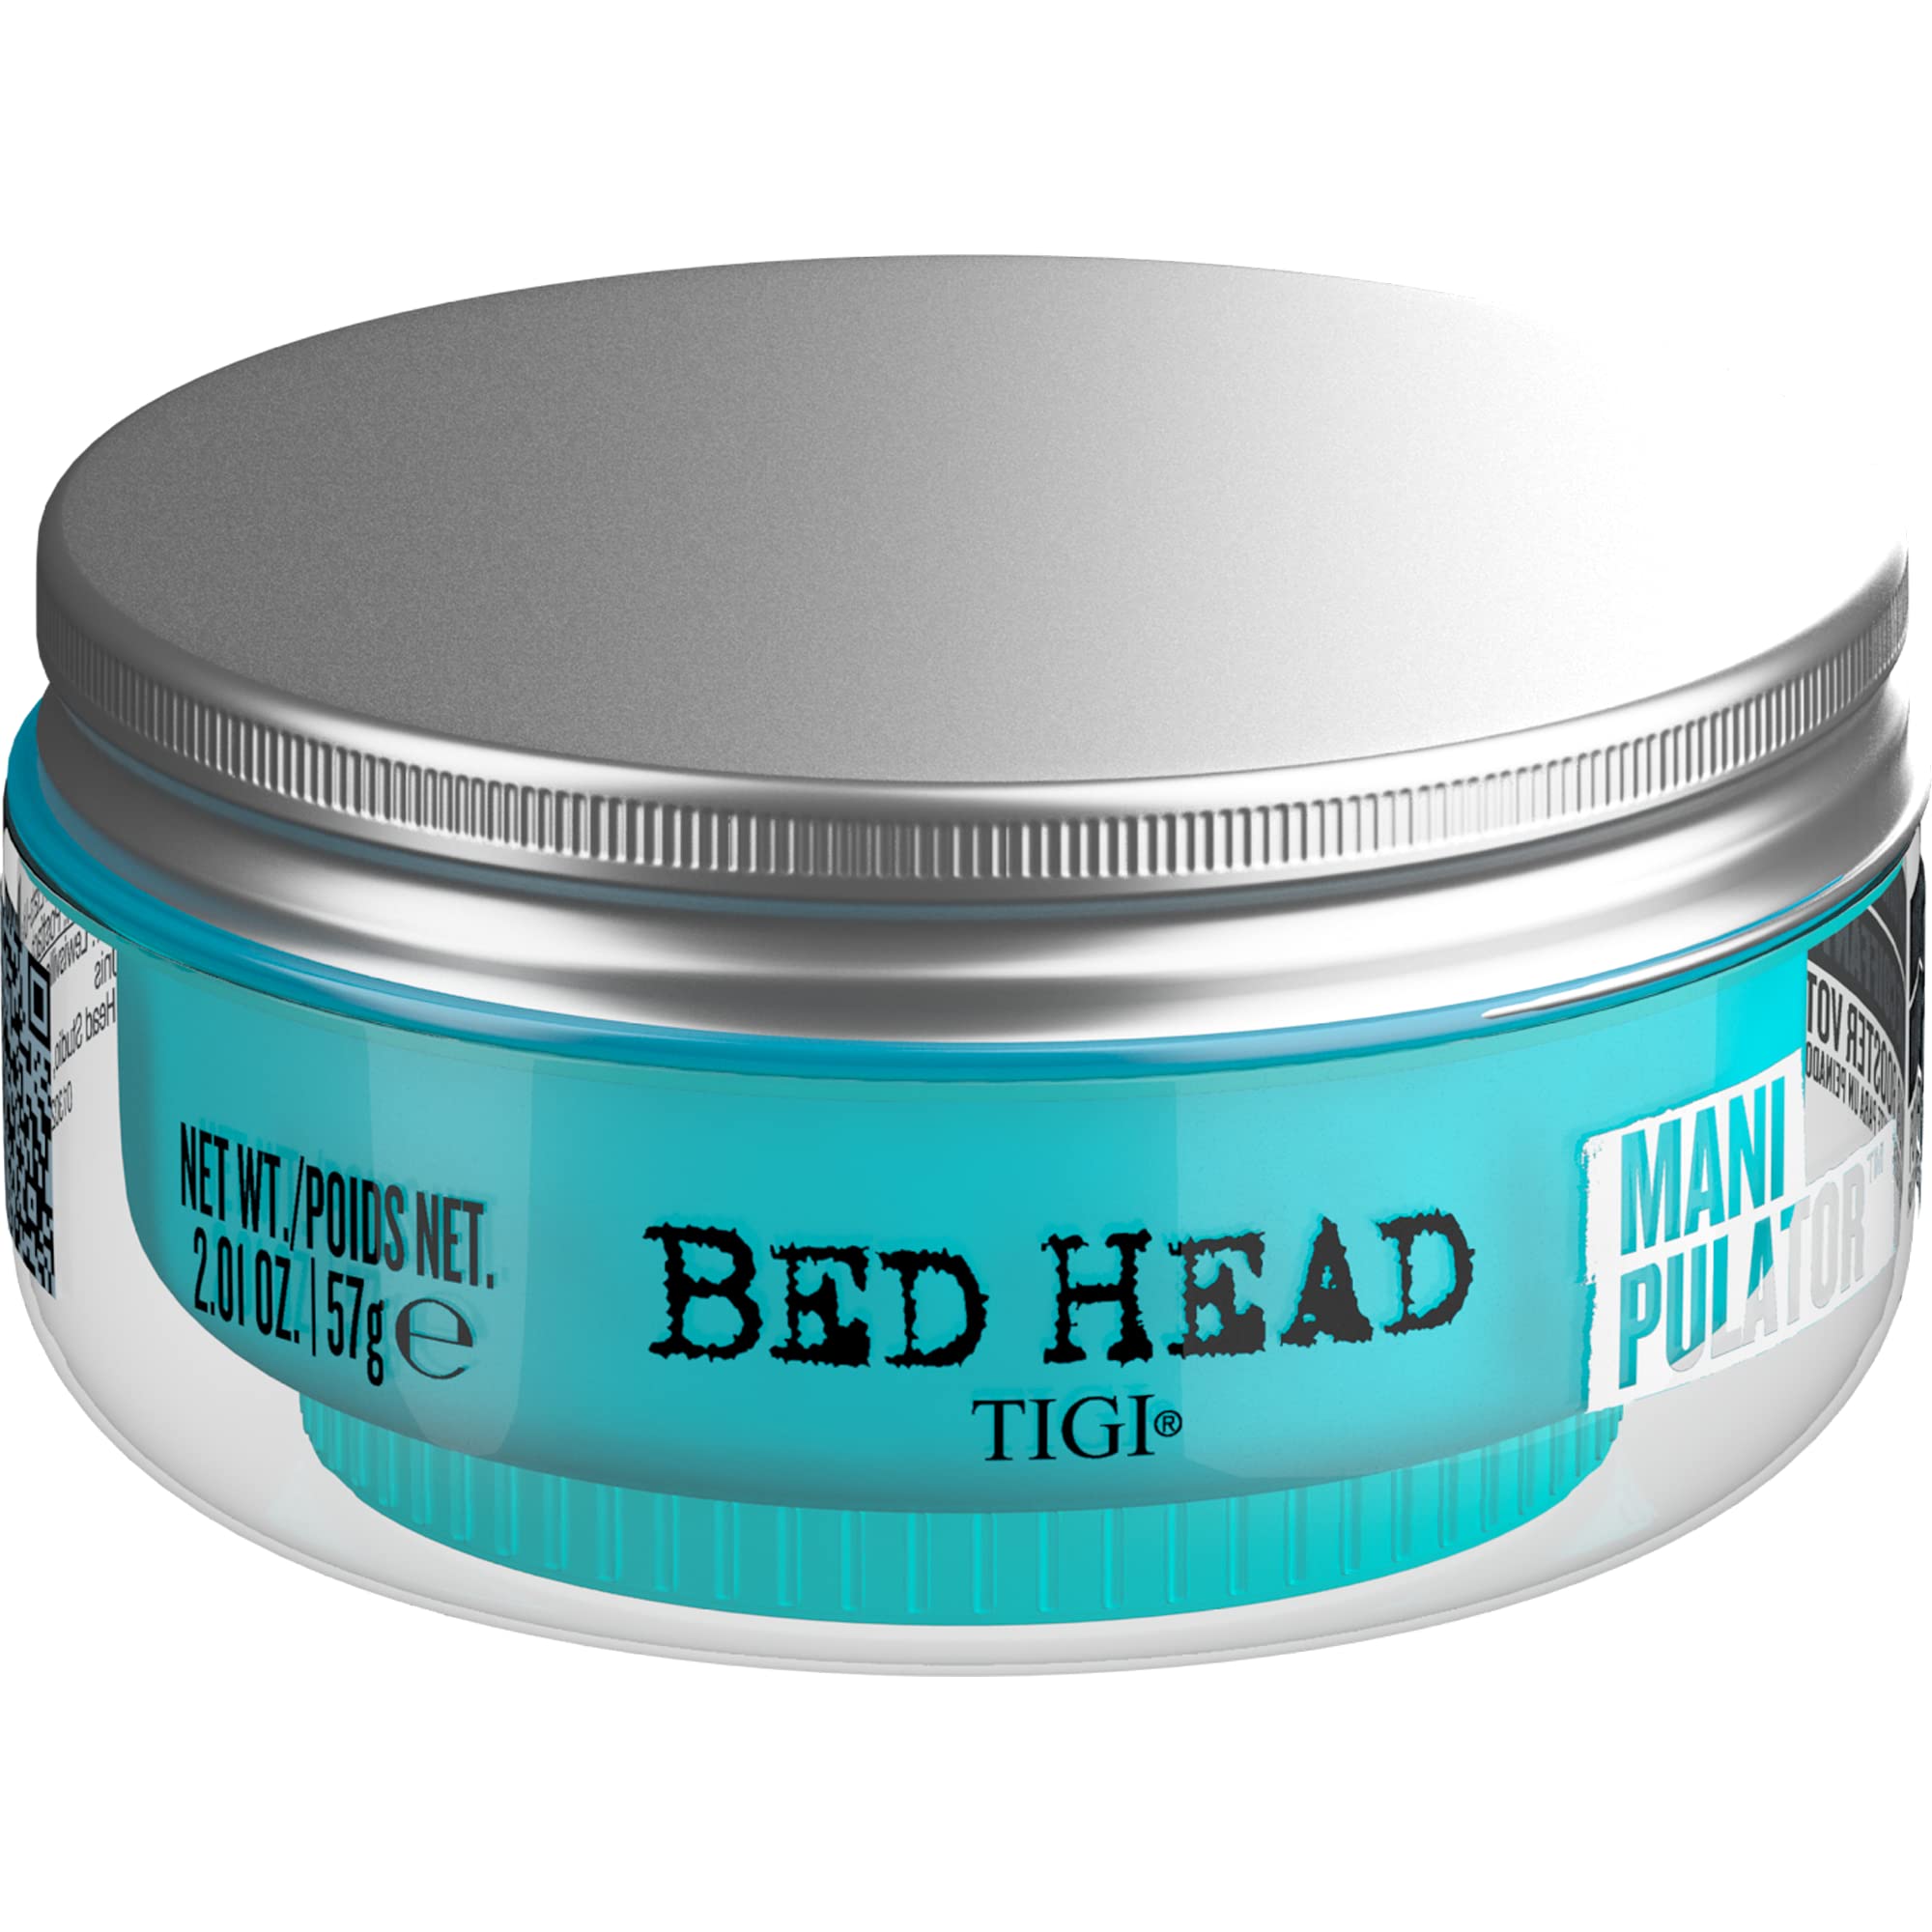 TIGI Bed Head Manipulator 2 Pack of